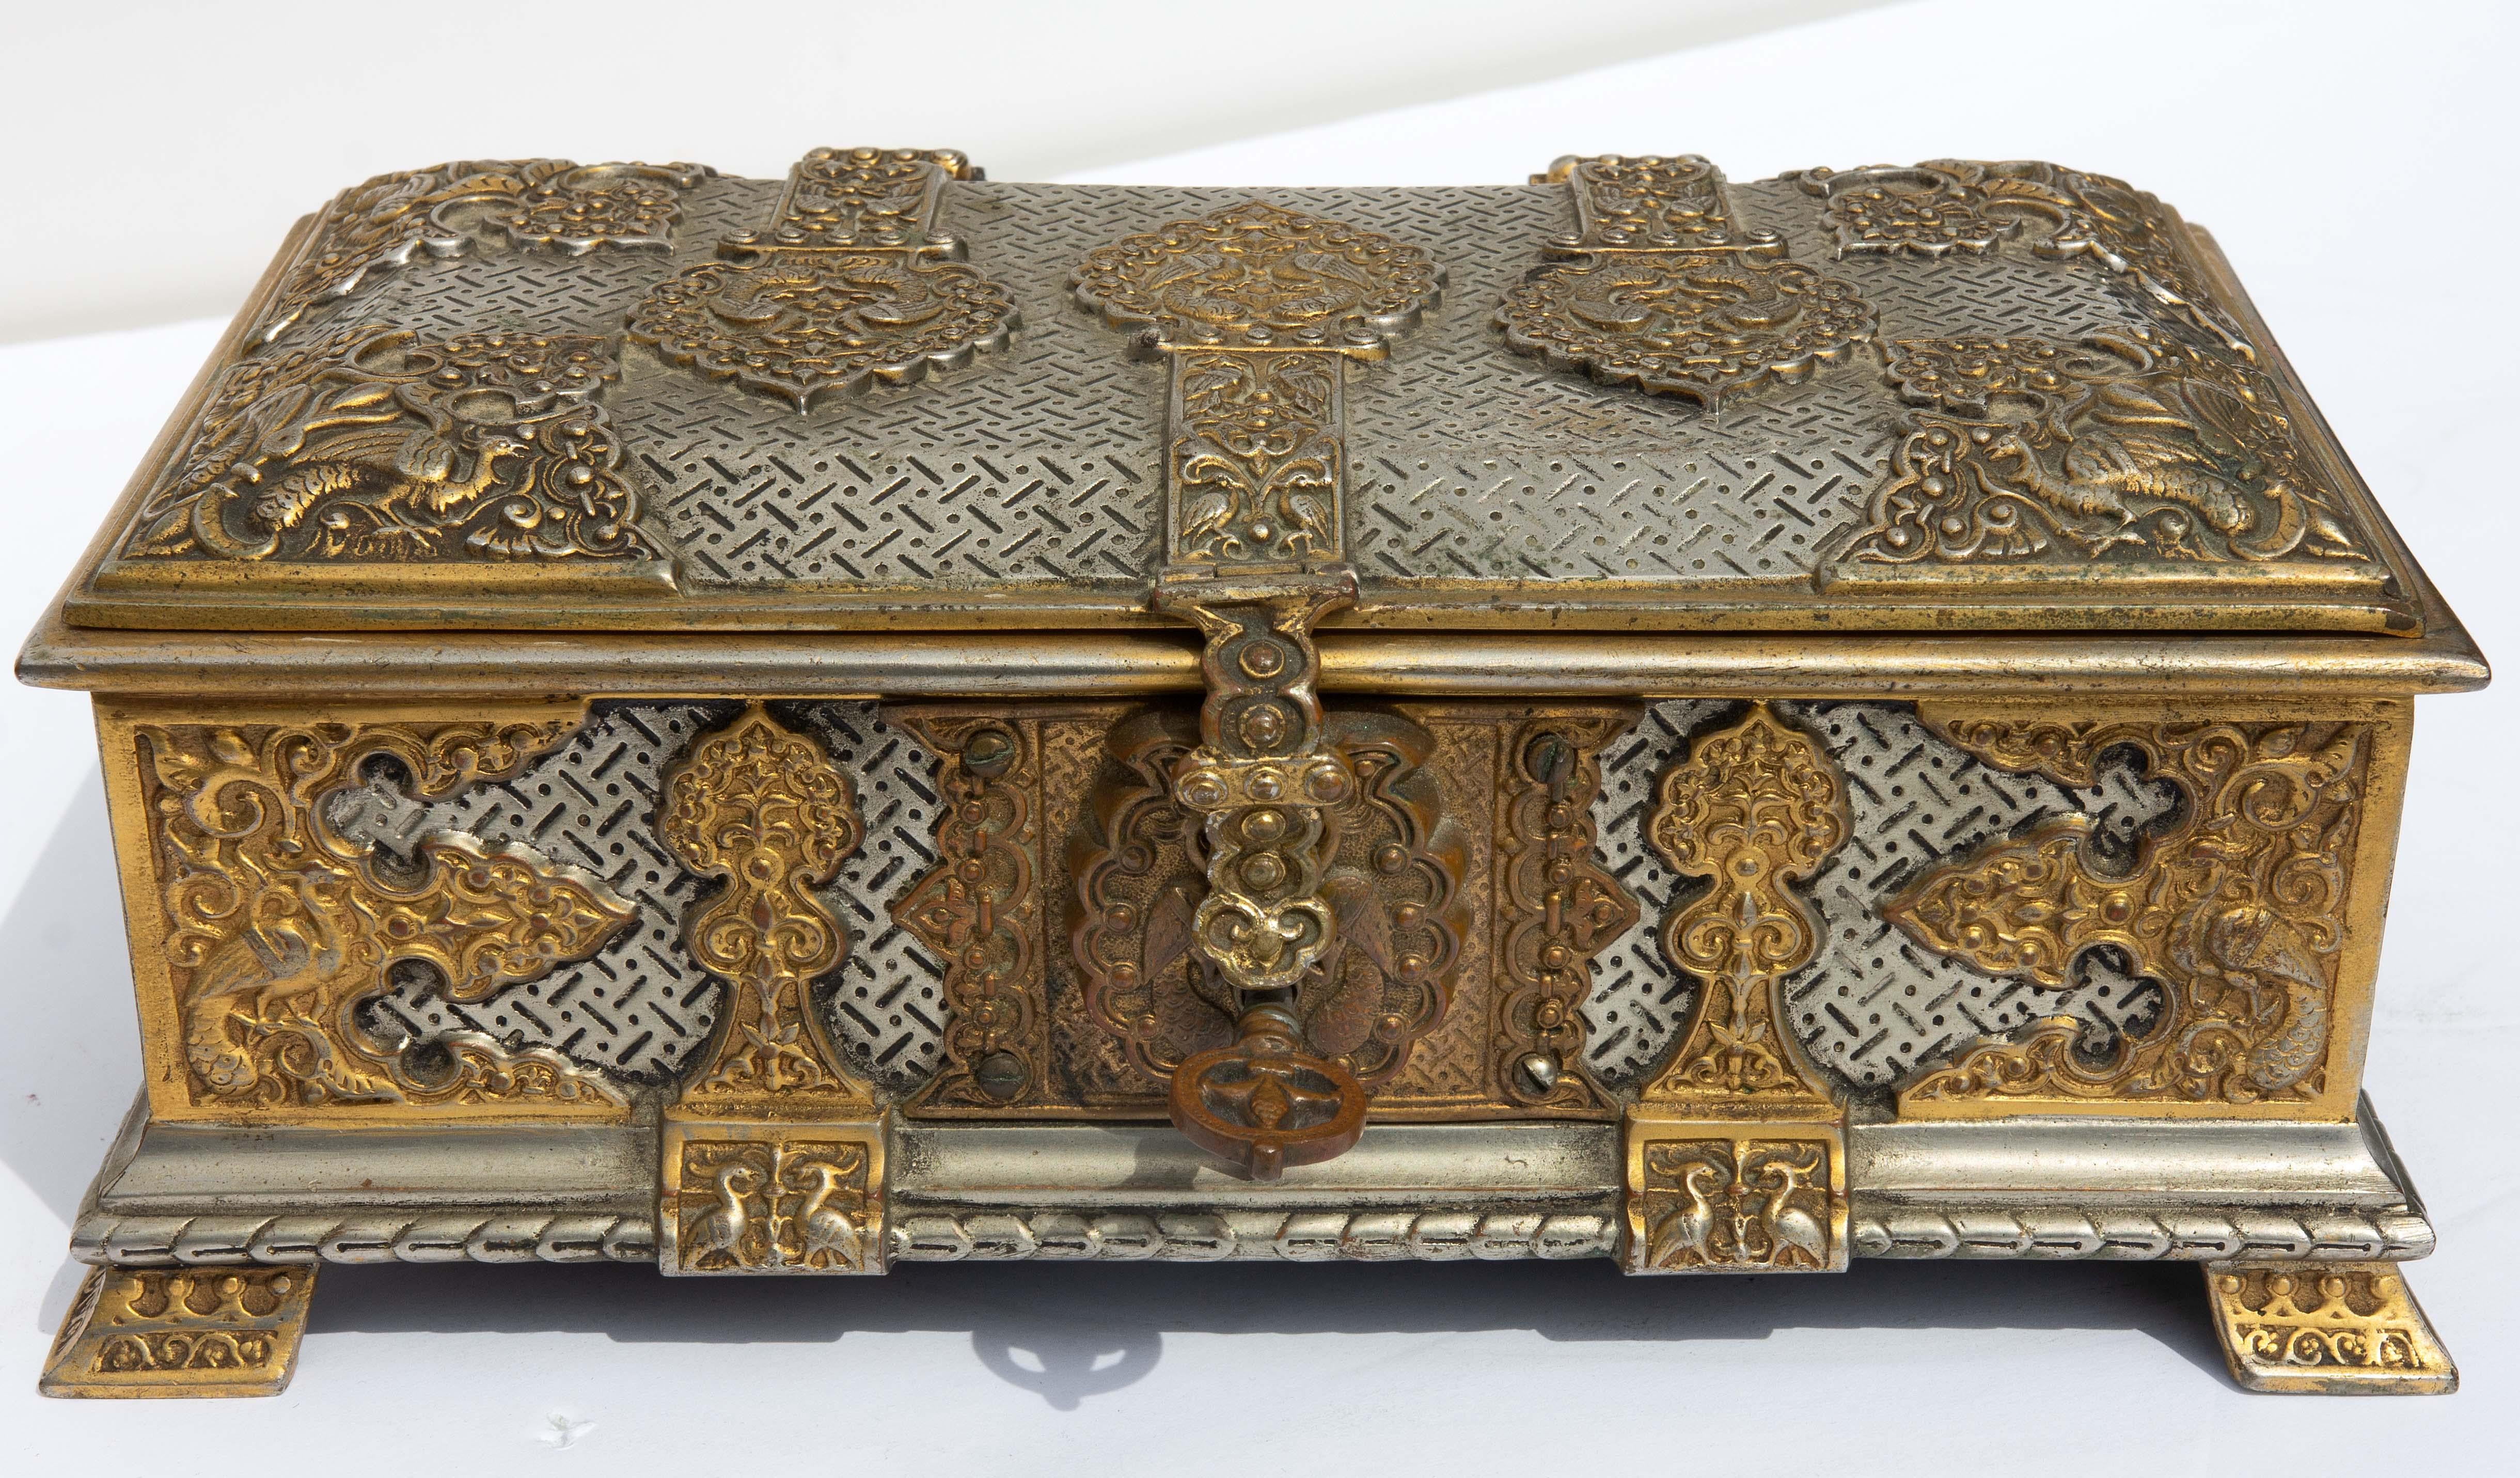 Orientalist Silver and Gold Gilt Bronze 19th Century Box For Sale 2